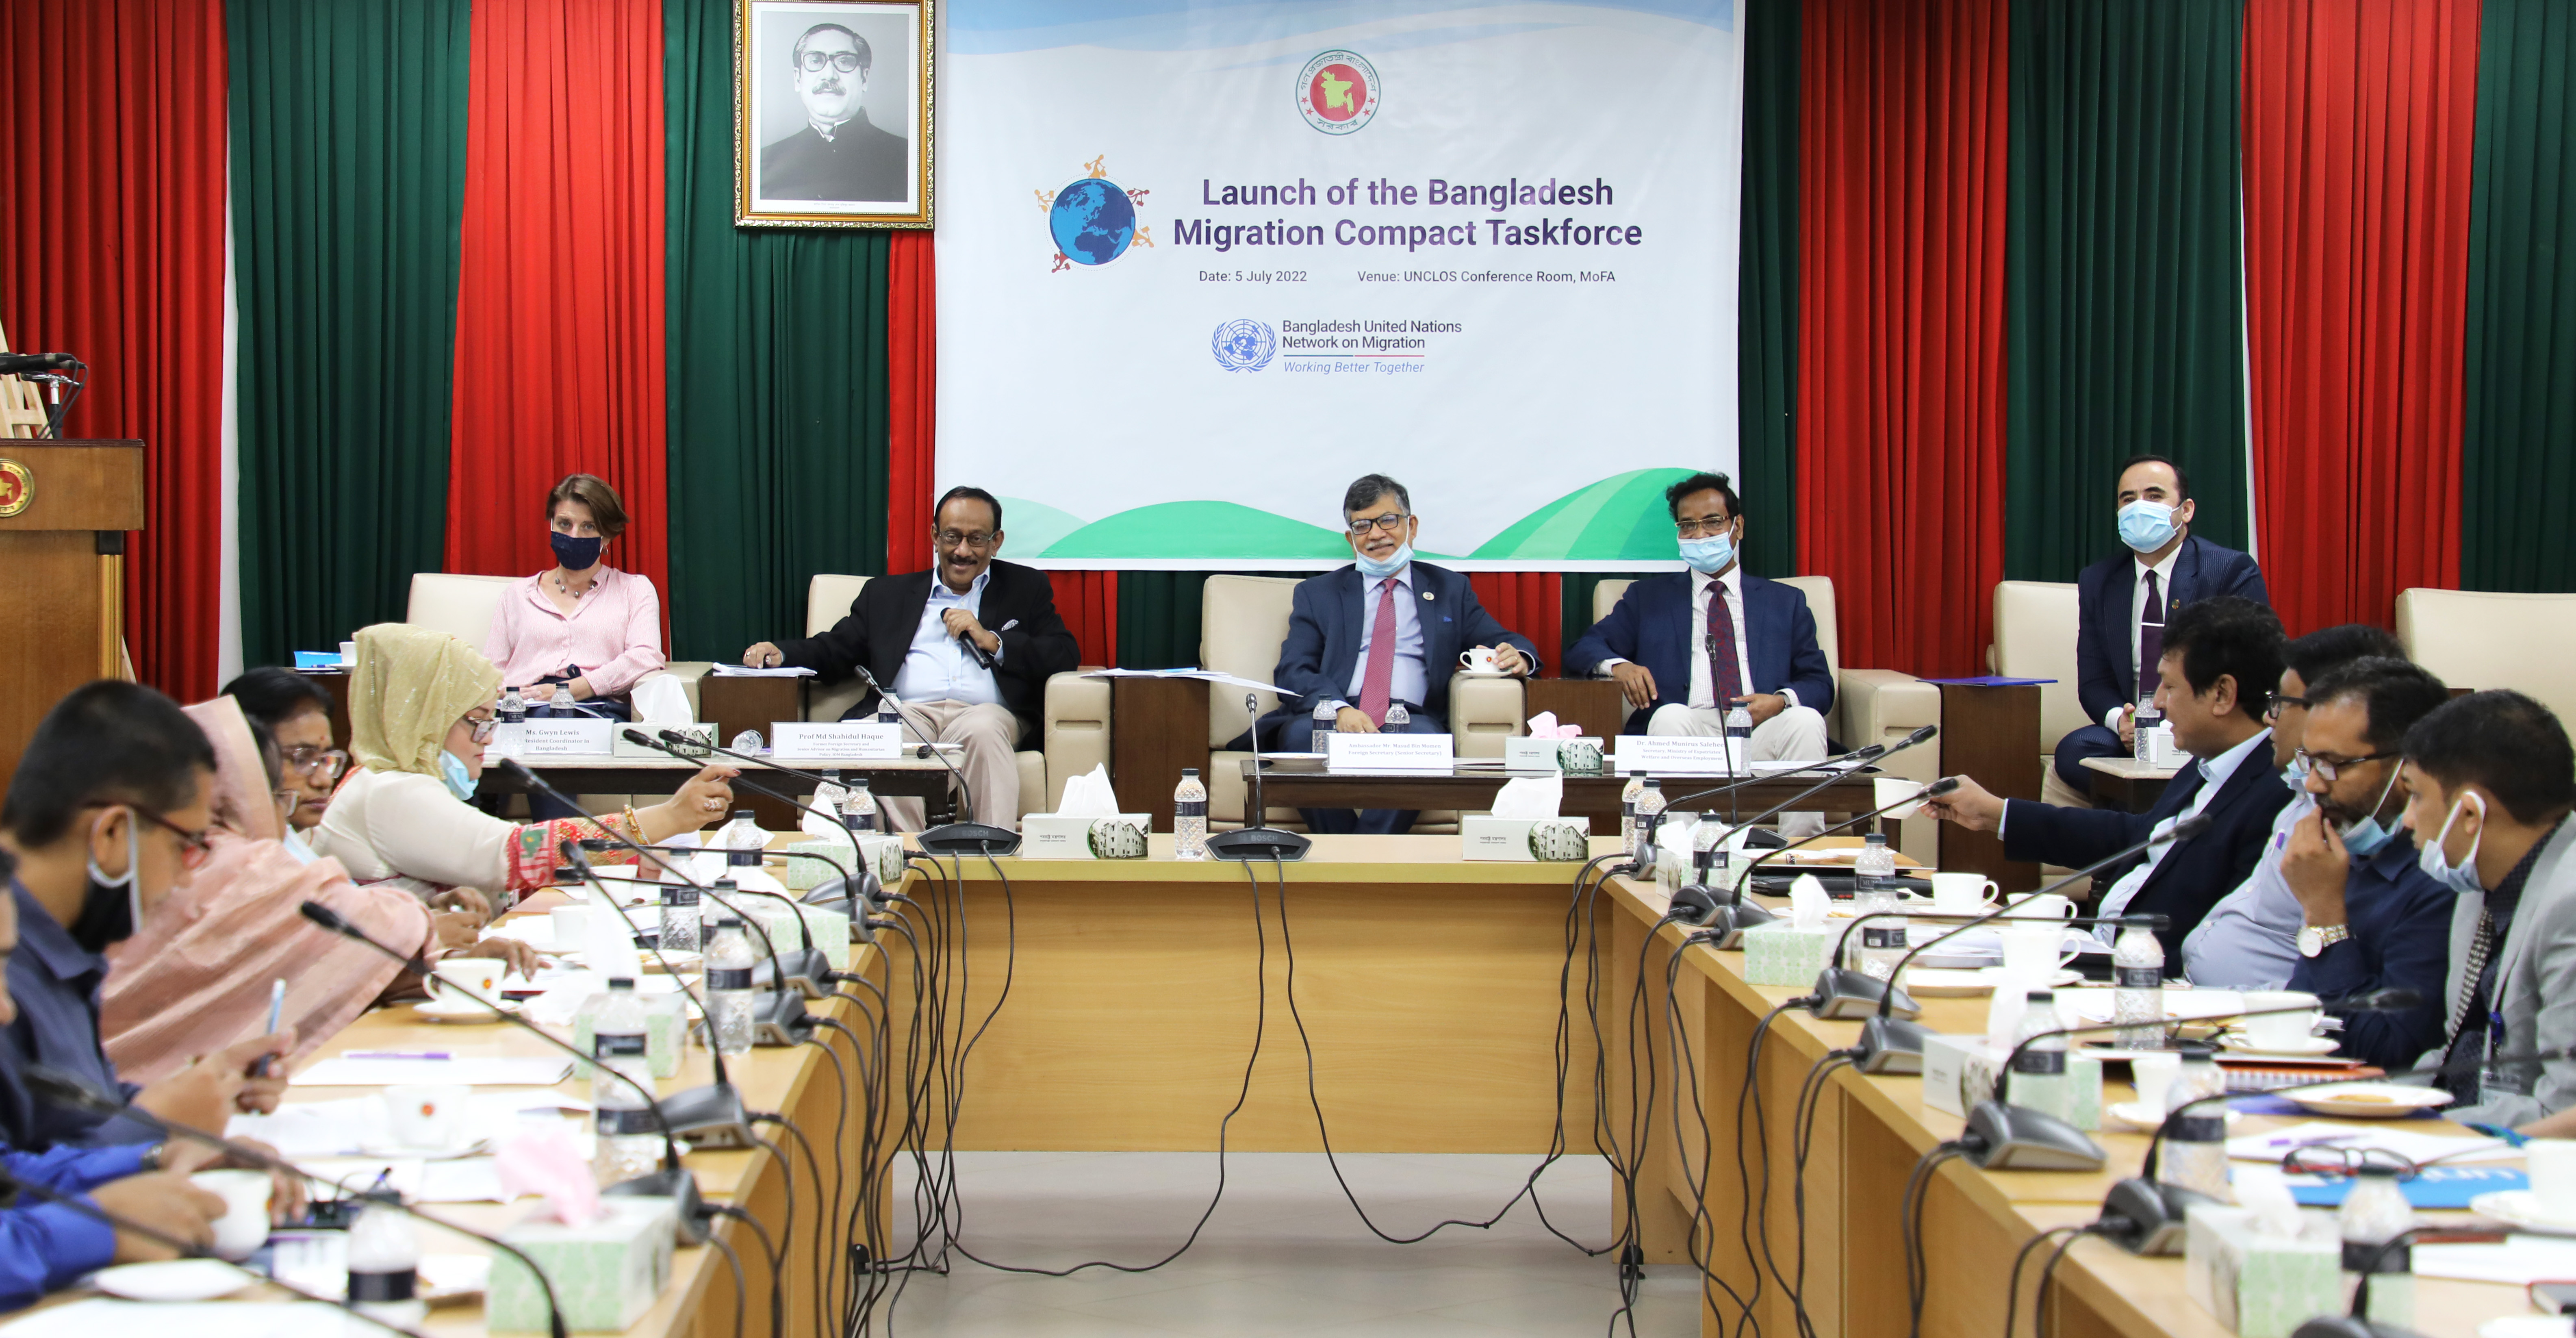 Bangladesh Migration Compact Taskforce to ensure safe, orderly, and regular migration